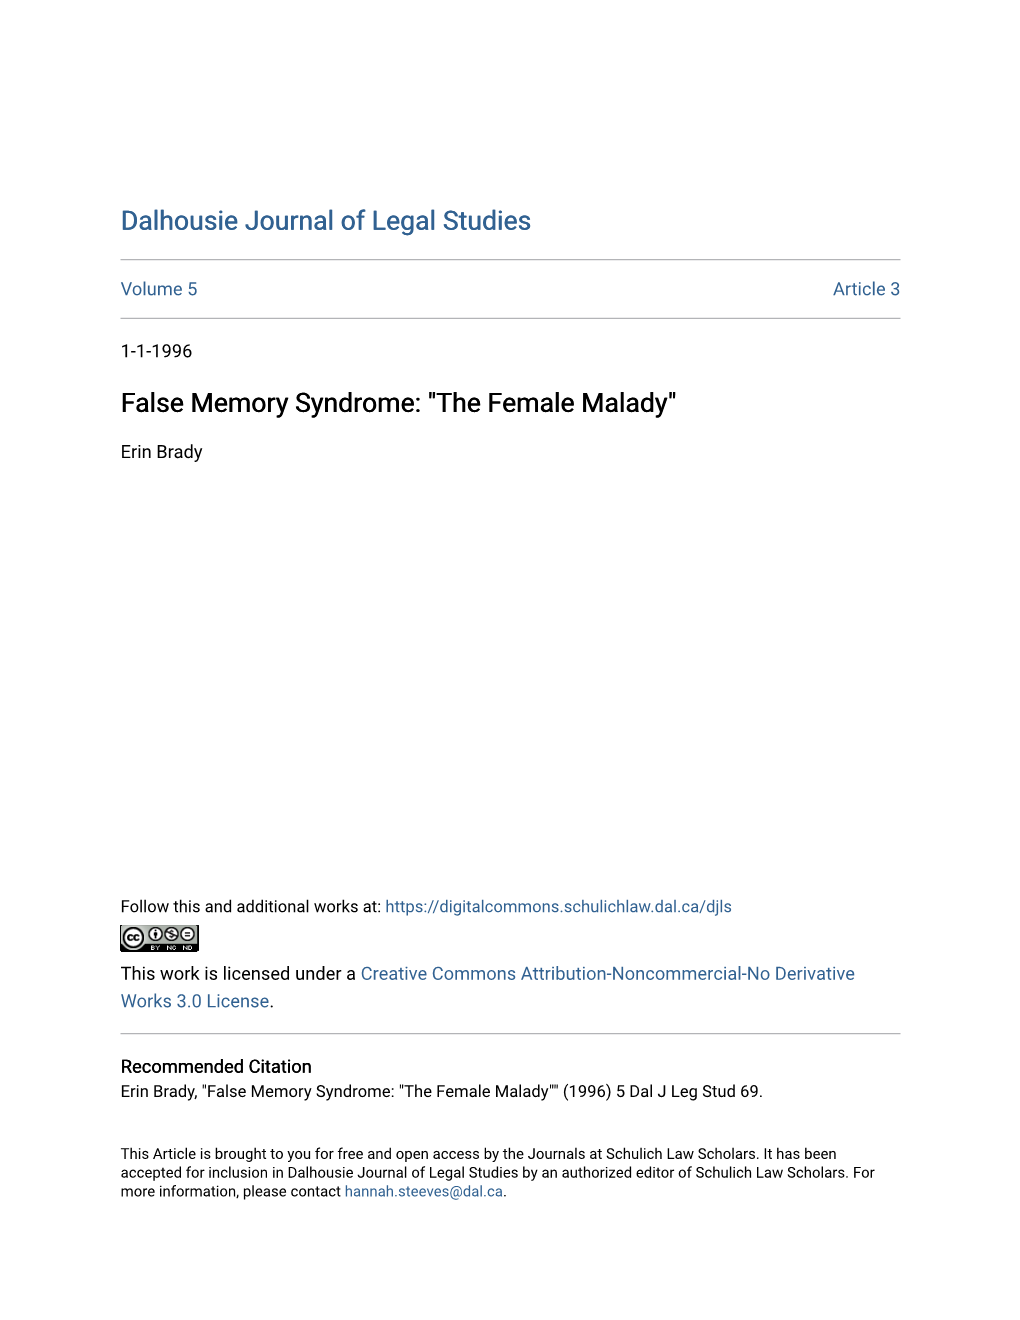 False Memory Syndrome: "The Female Malady"